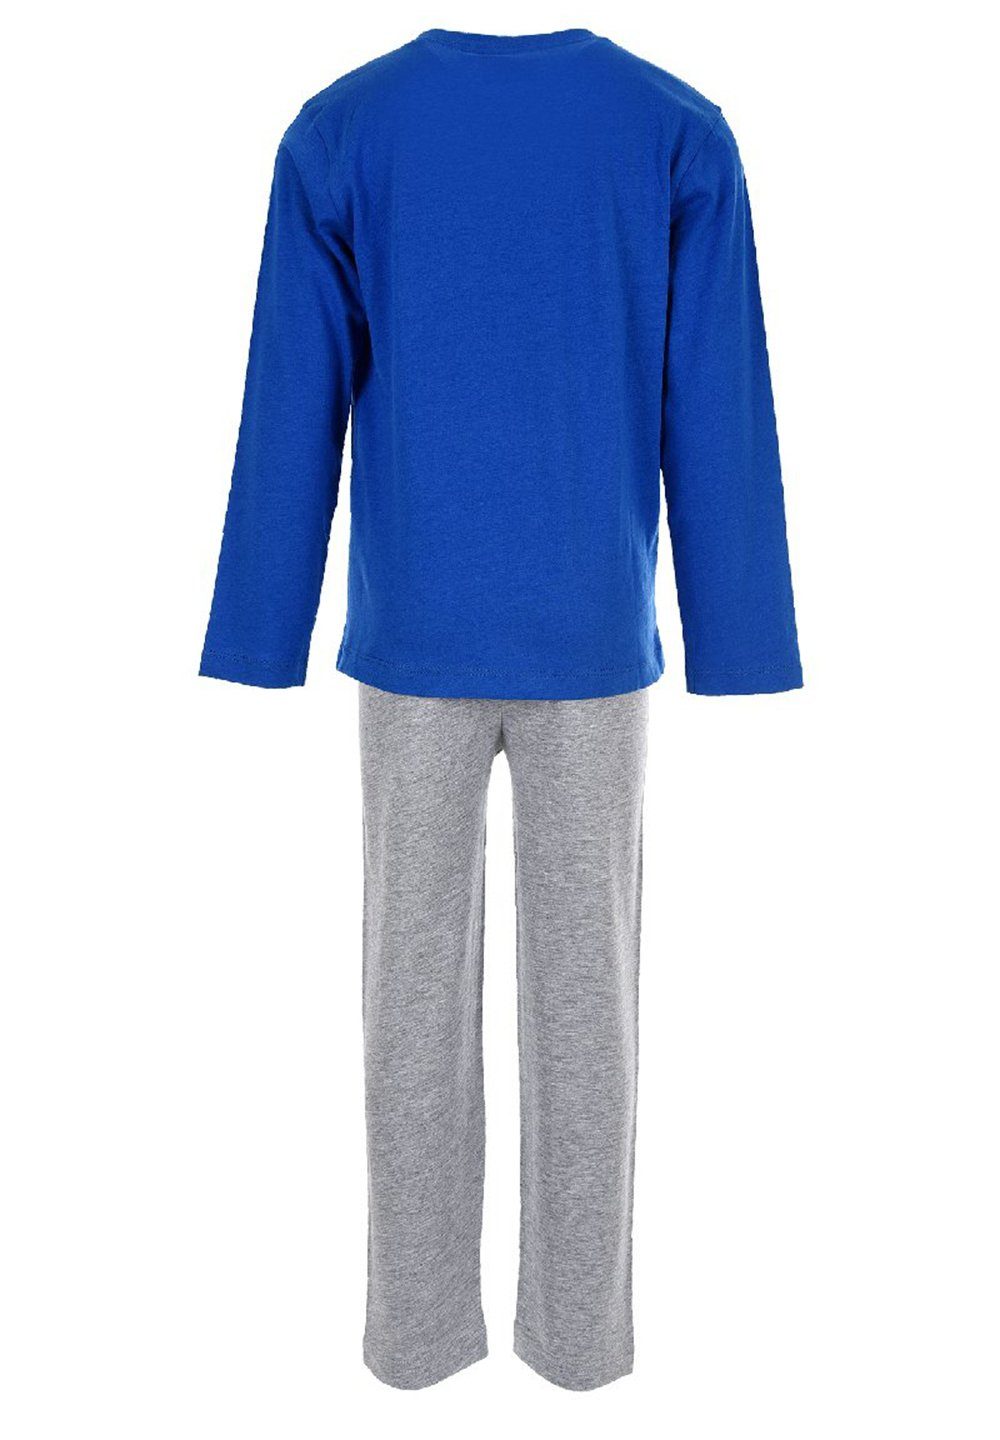 PAW tlg) Schlaf-set Pyjama Blau Chase Jungen Kinder PATROL Marshall (2 Schlafanzug